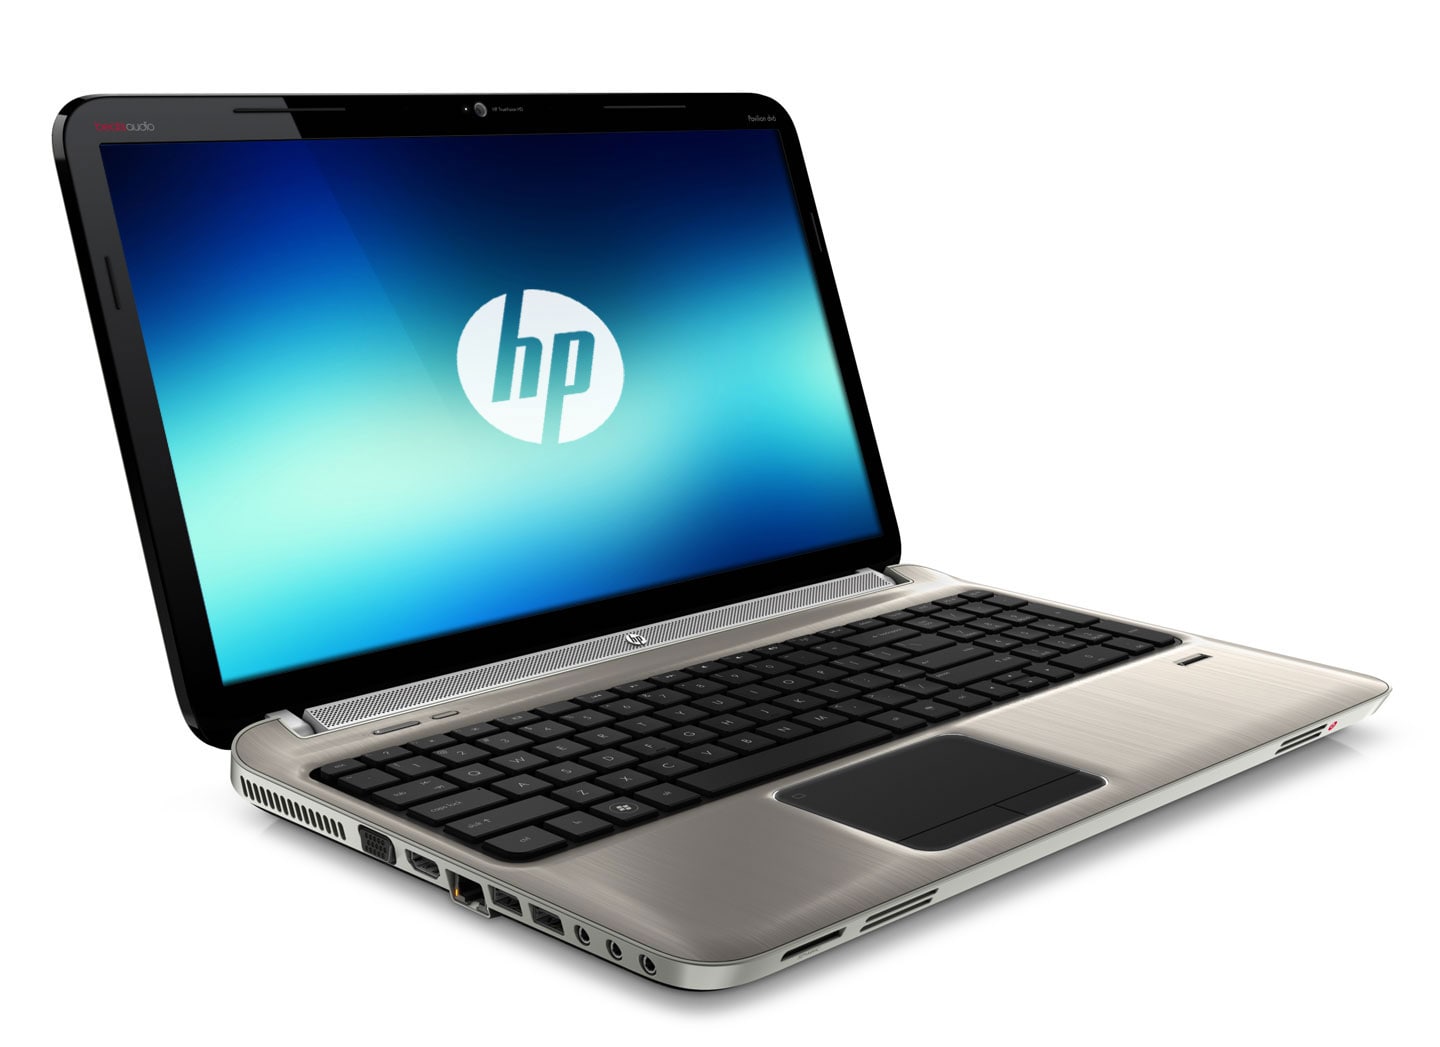 HP Pavilion dv6-6b06ev - Laptop - Ασημί | Getitnow.gr